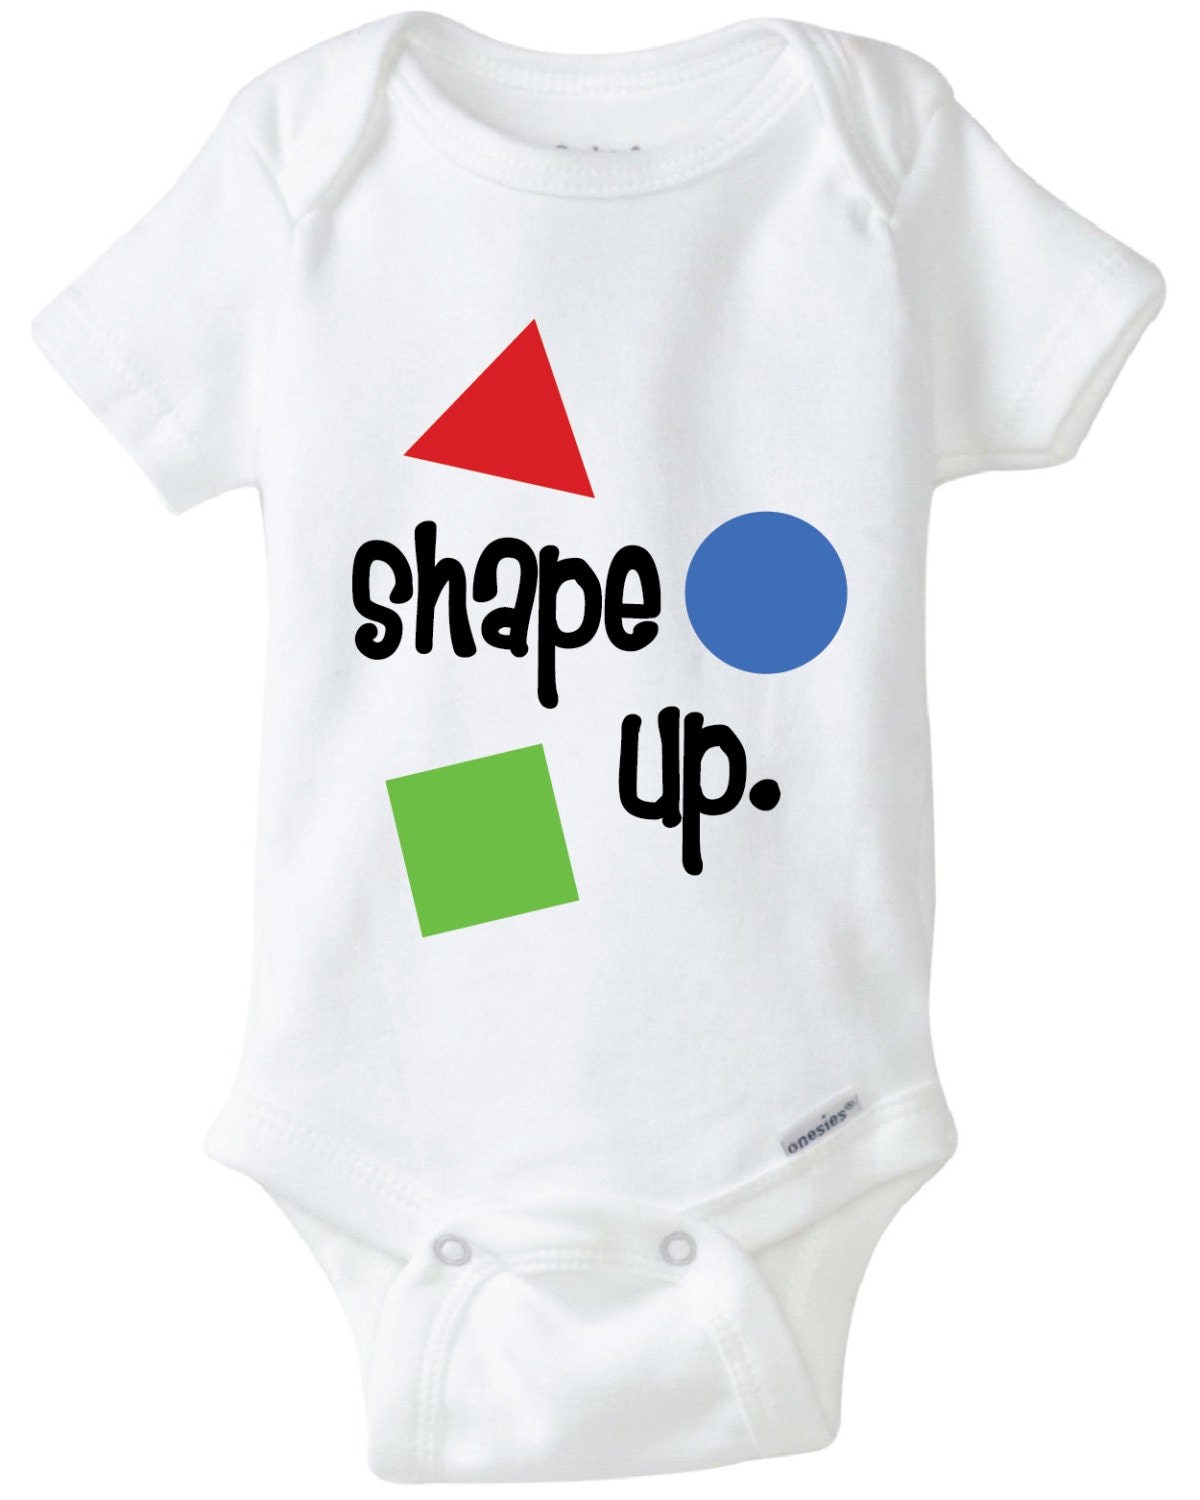 Download Shape Up Baby Onesie Design SVG DXF EPS Vector files for